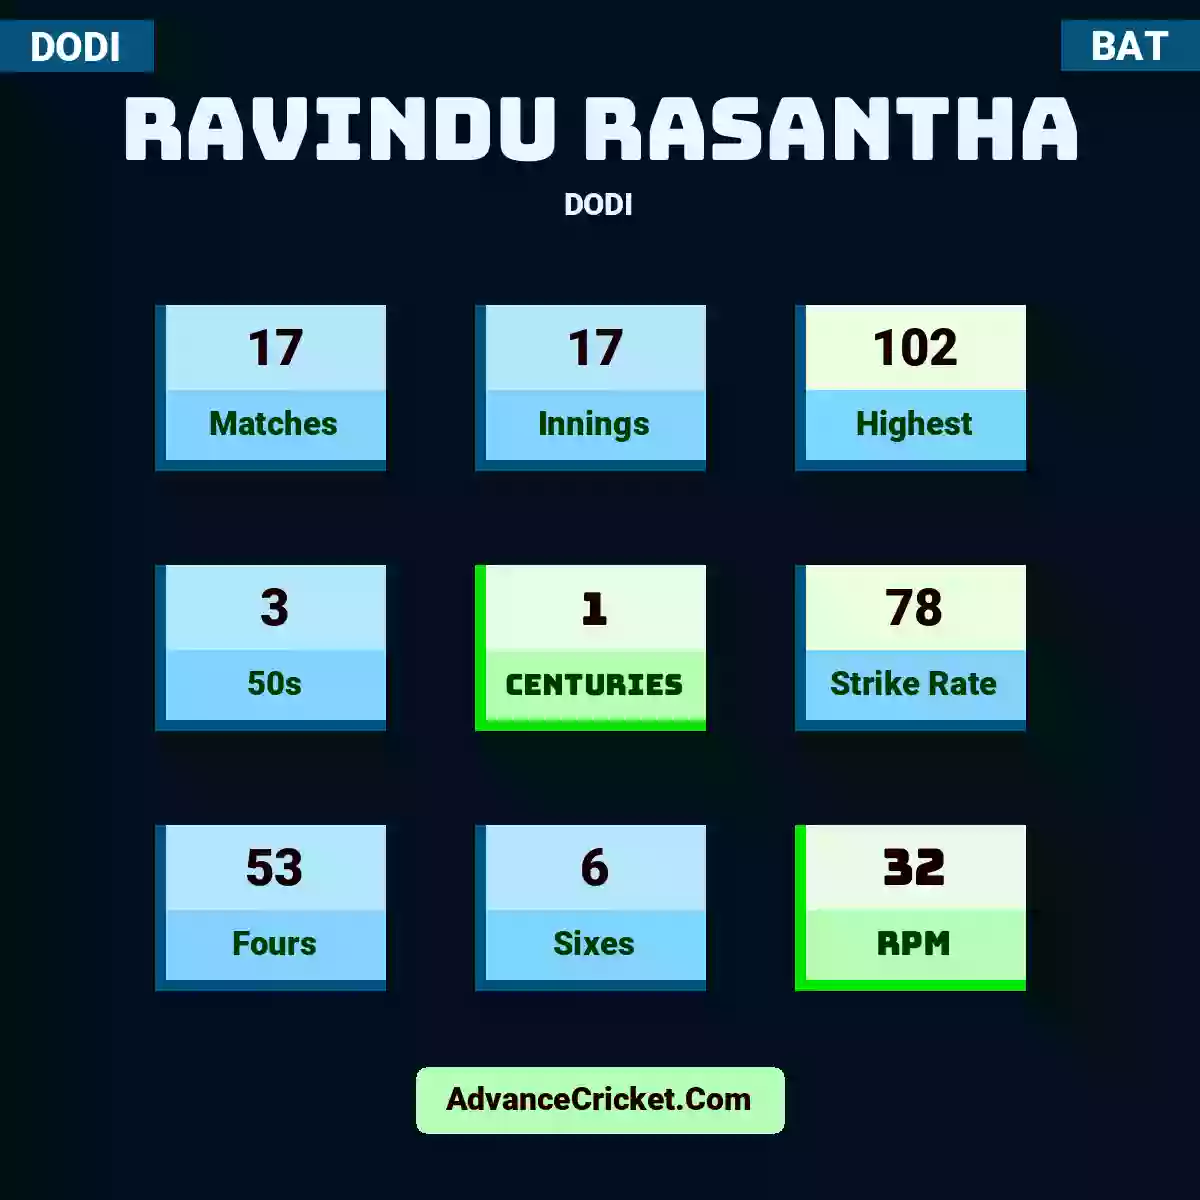 Ravindu Rasantha DODI , Ravindu Rasantha played 17 matches, scored 102 runs as highest, 3 half-centuries, and 1 centuries, with a strike rate of 78. R.Rasantha hit 53 fours and 6 sixes, with an RPM of 32.